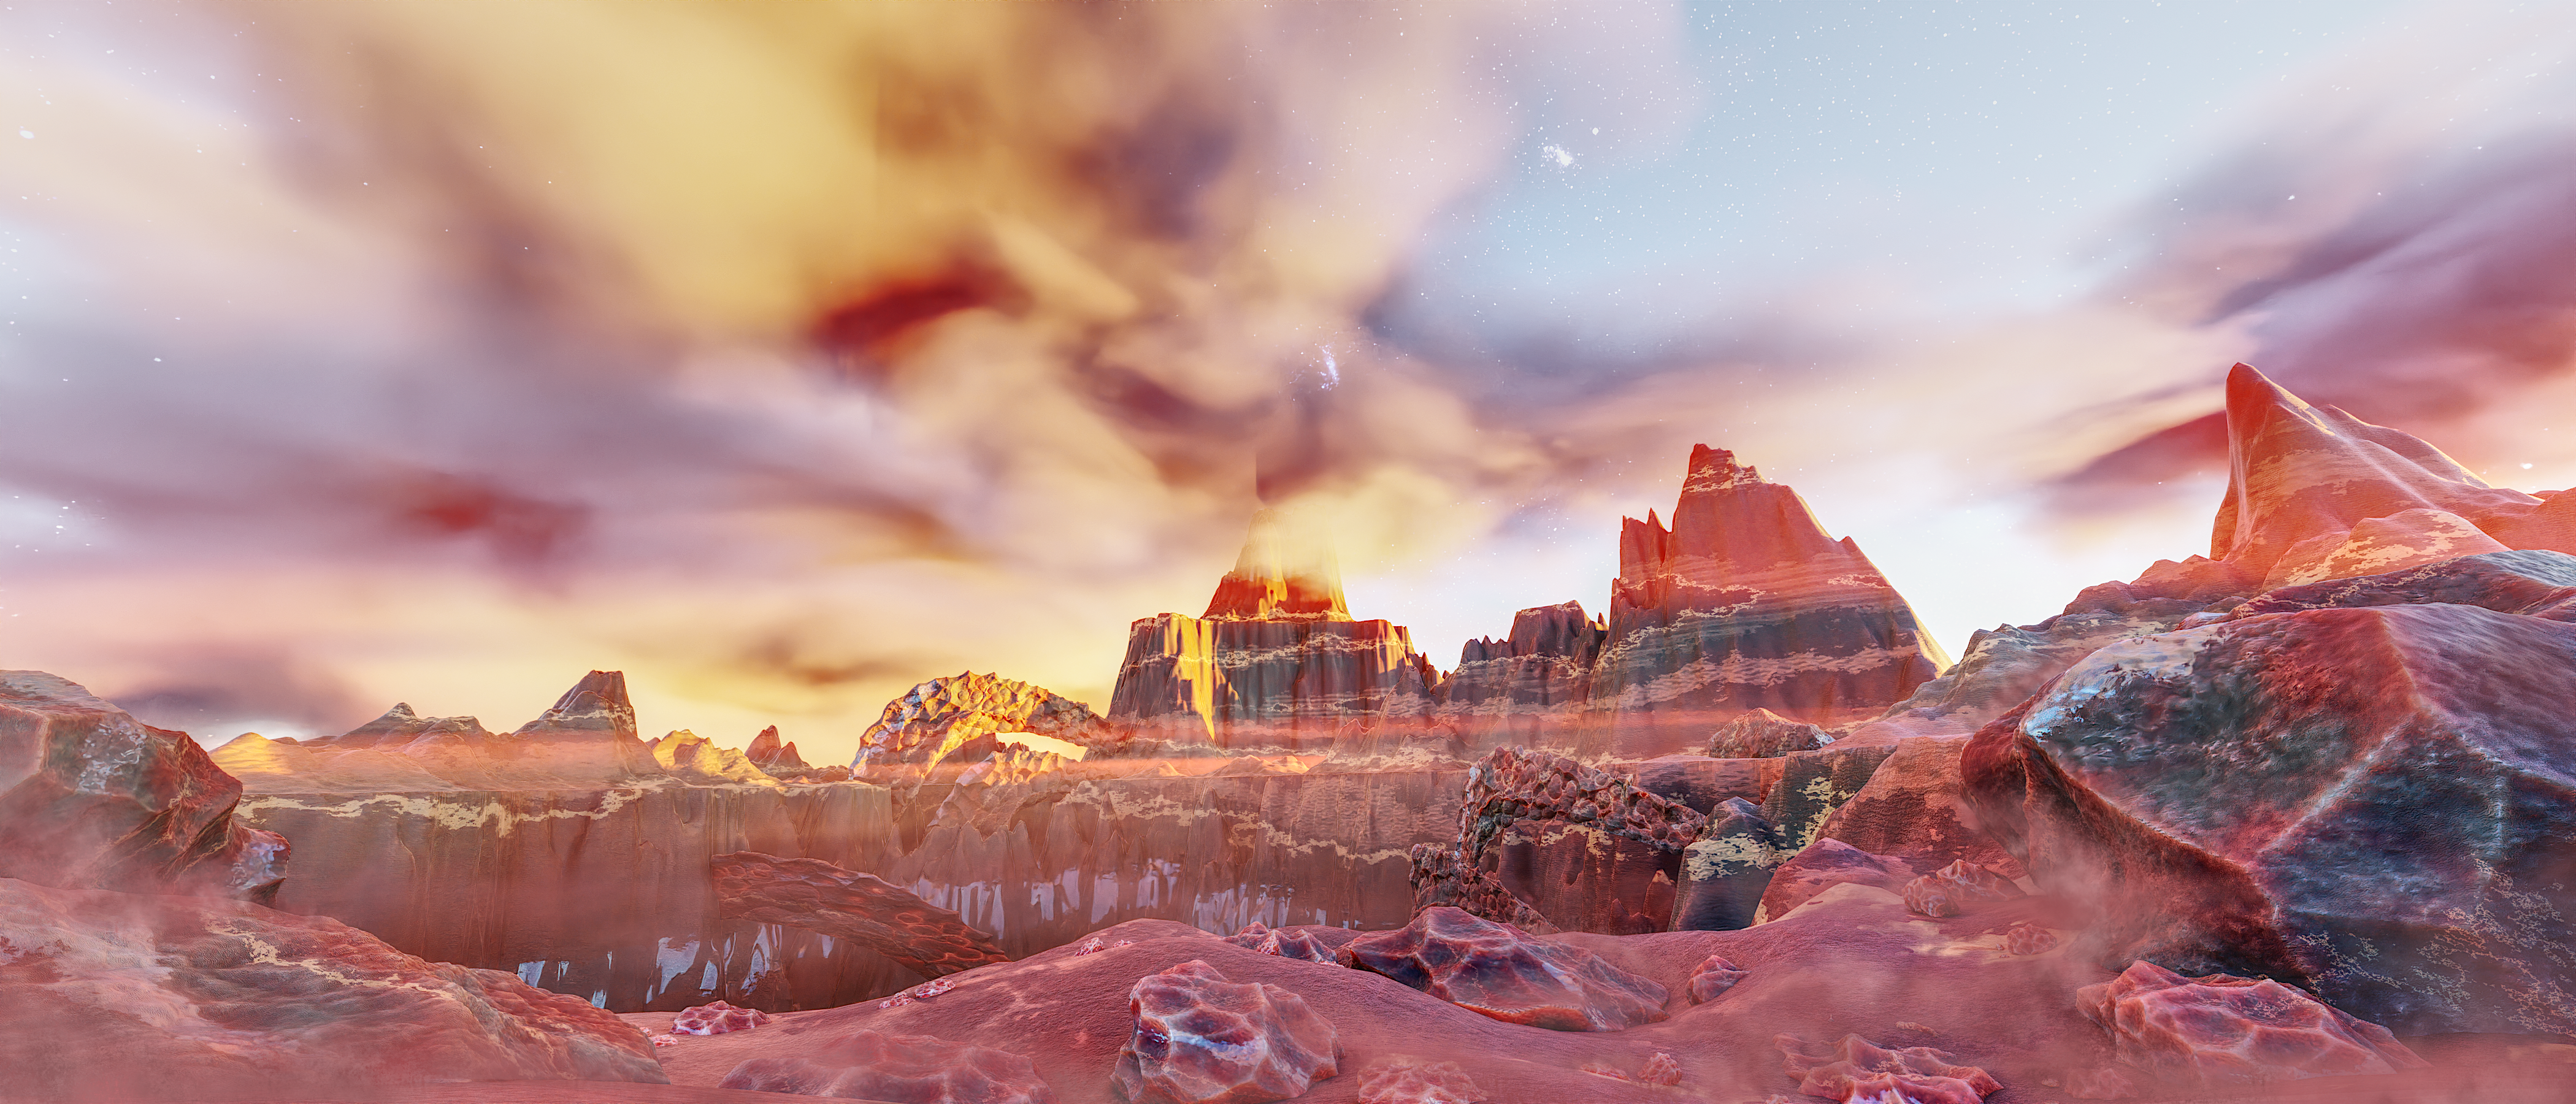 General 4200x1800 landscape alien world desert dust Blender CGI Affinity sky clouds digital art